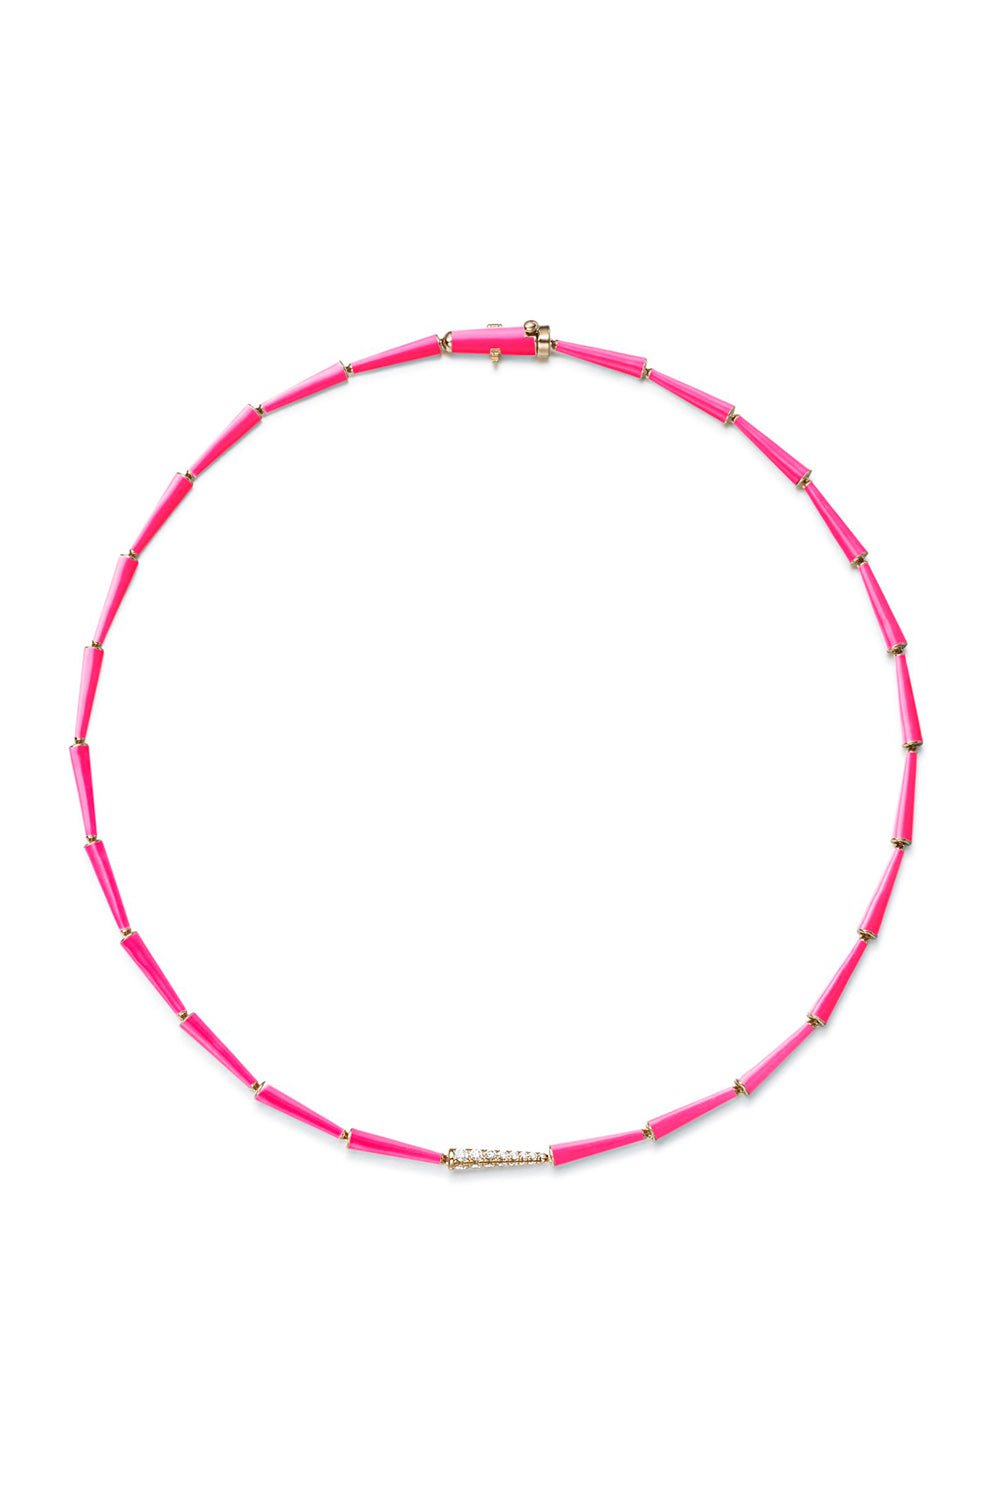 MELISSA KAYE-Neon Pink Lola Linked Necklace-ROSE GOLD